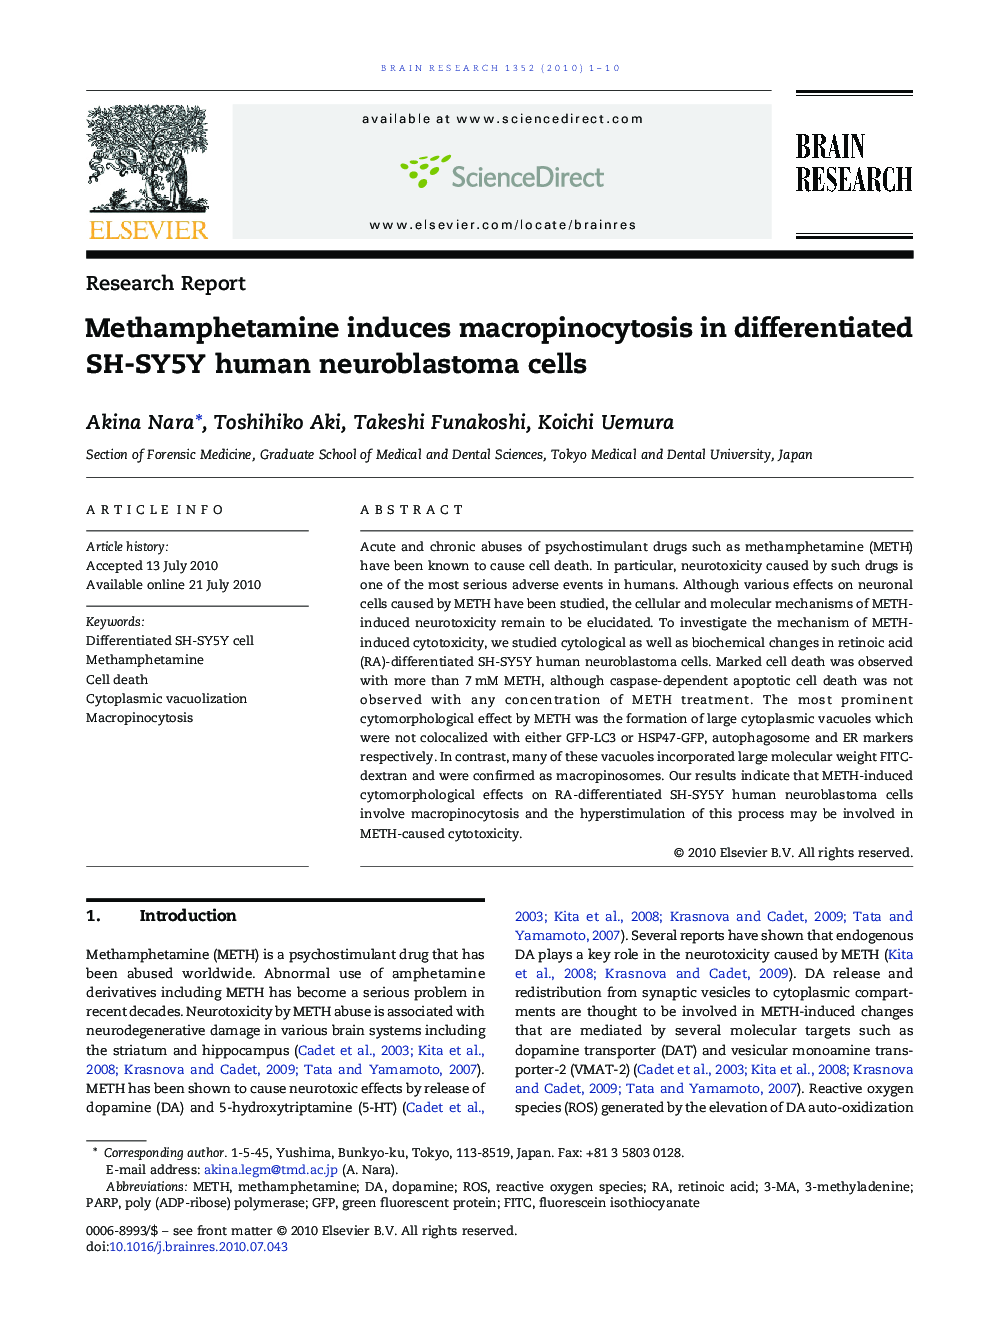 Methamphetamine induces macropinocytosis in differentiated SH-SY5Y human neuroblastoma cells